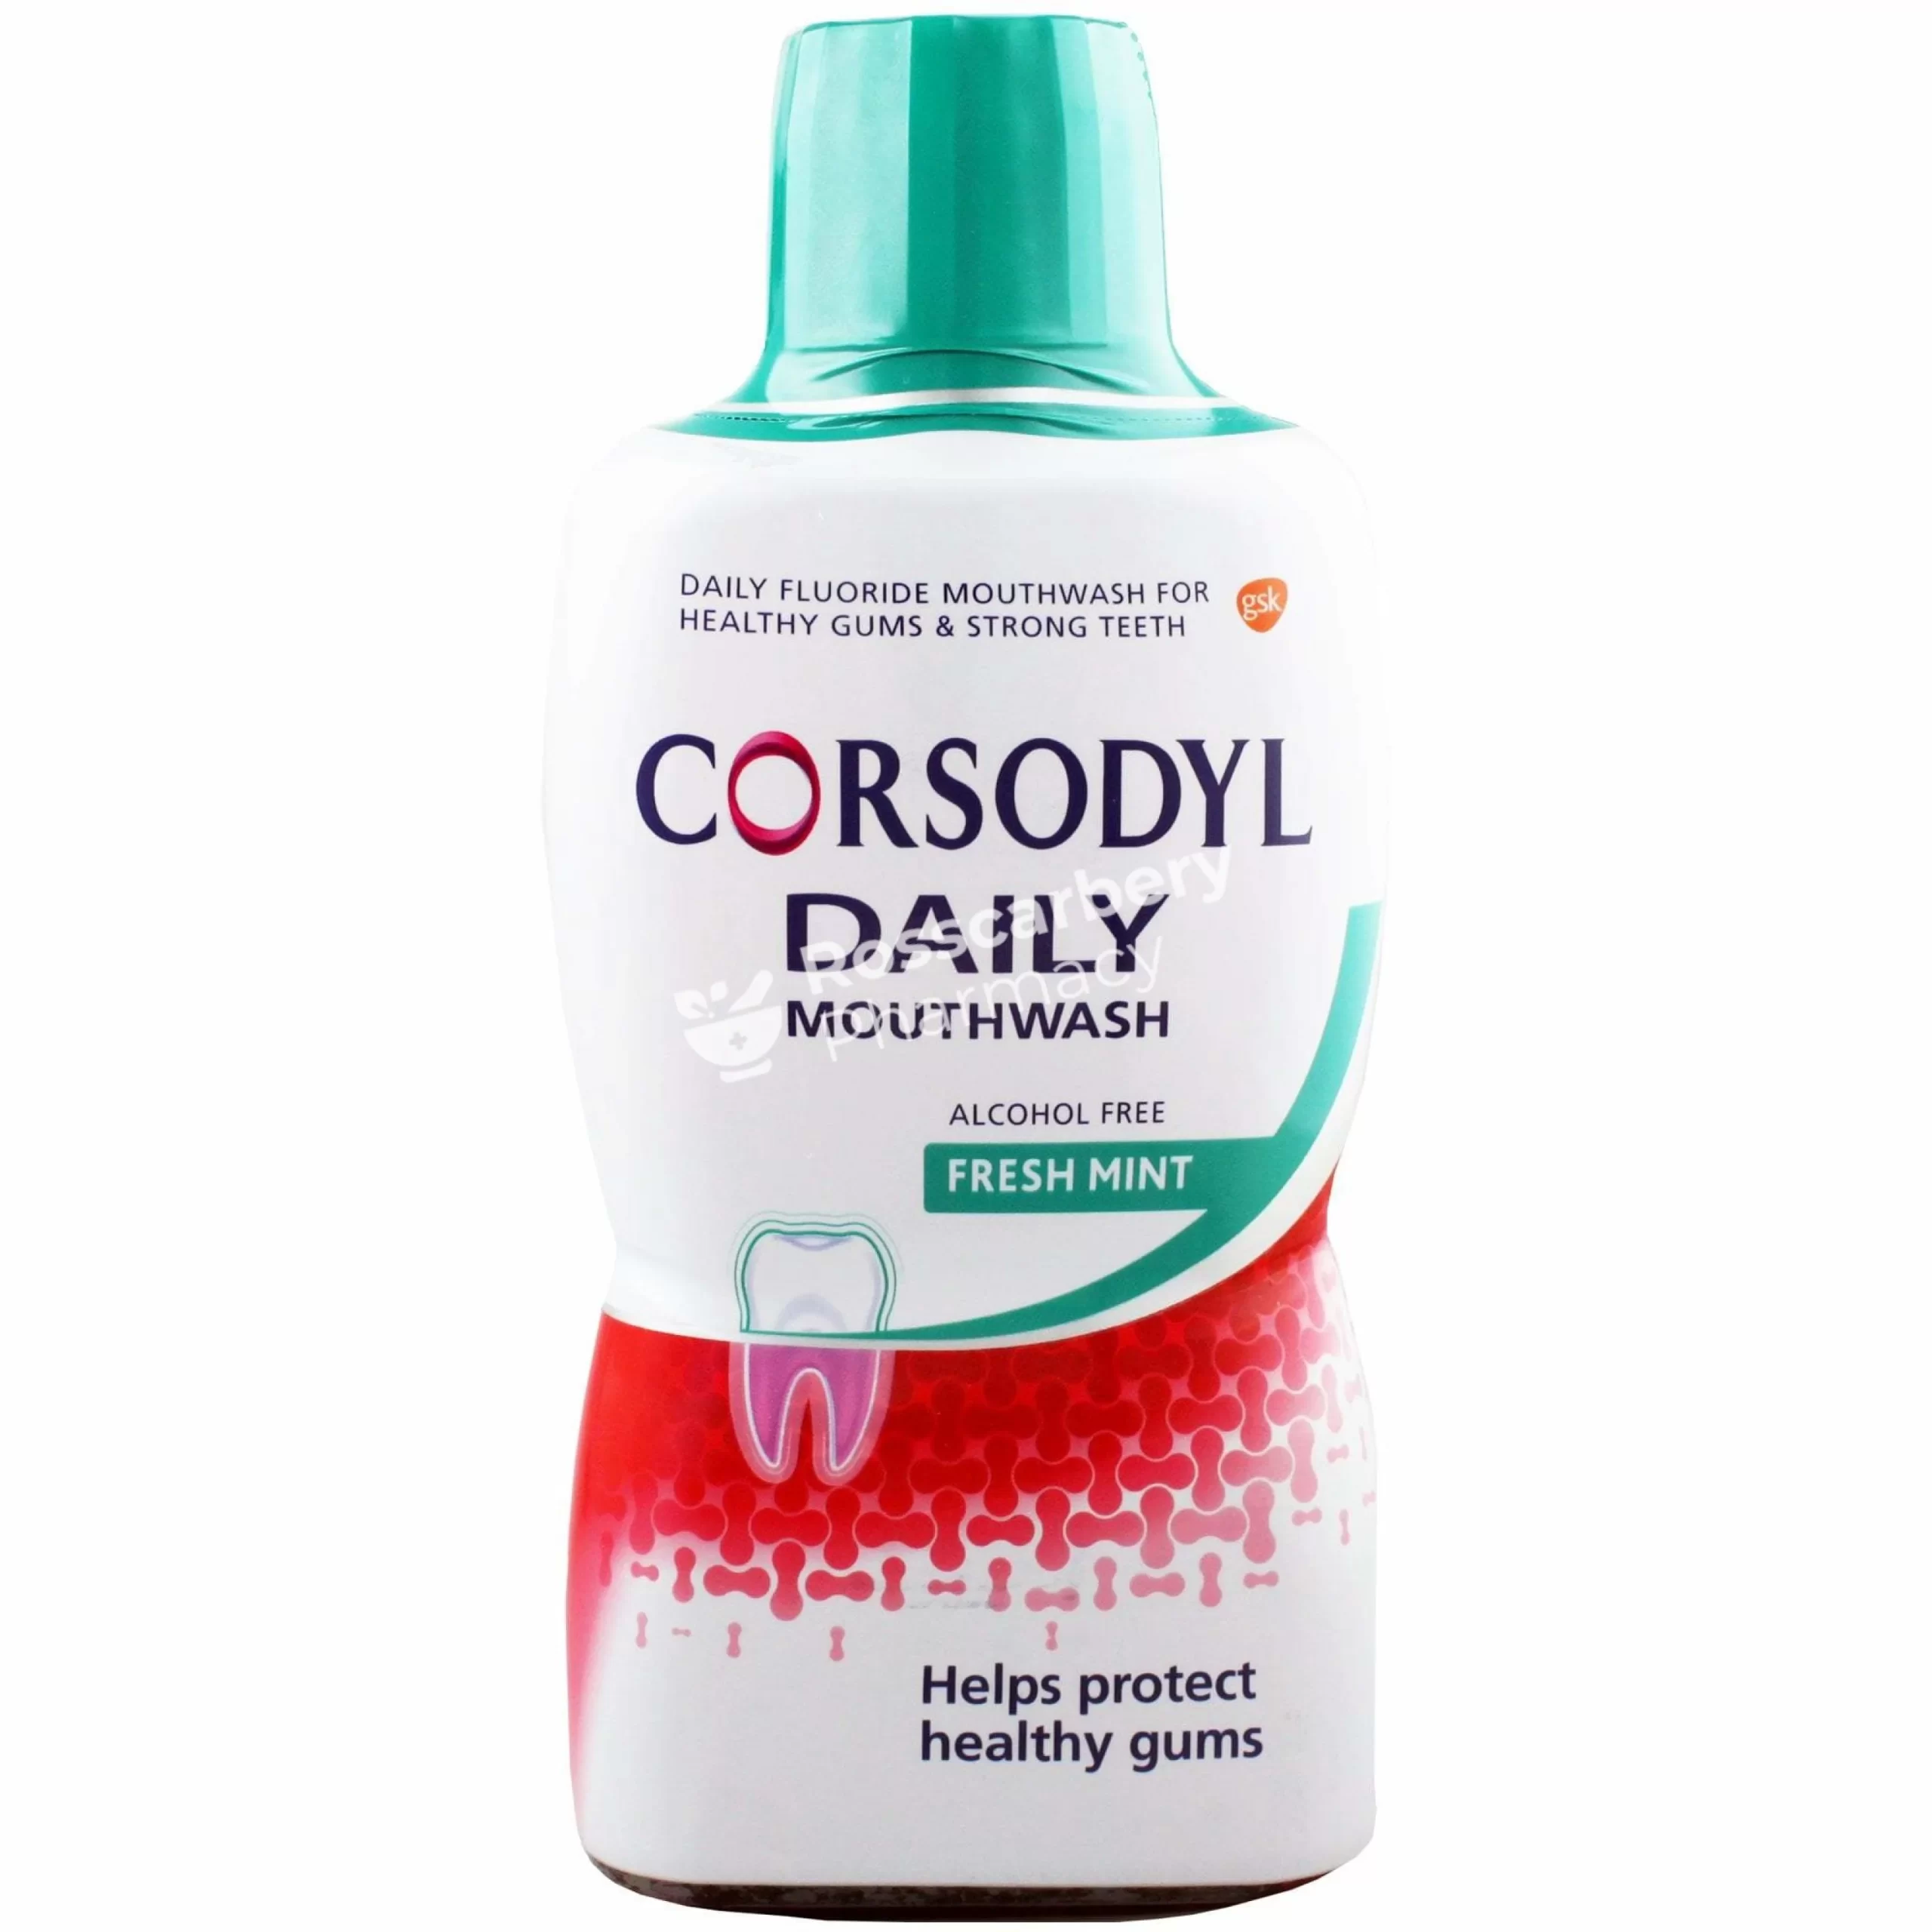 corsodyl-daily-mouthwash-alcohol-free-500ml-fresh-mint-726_5000x